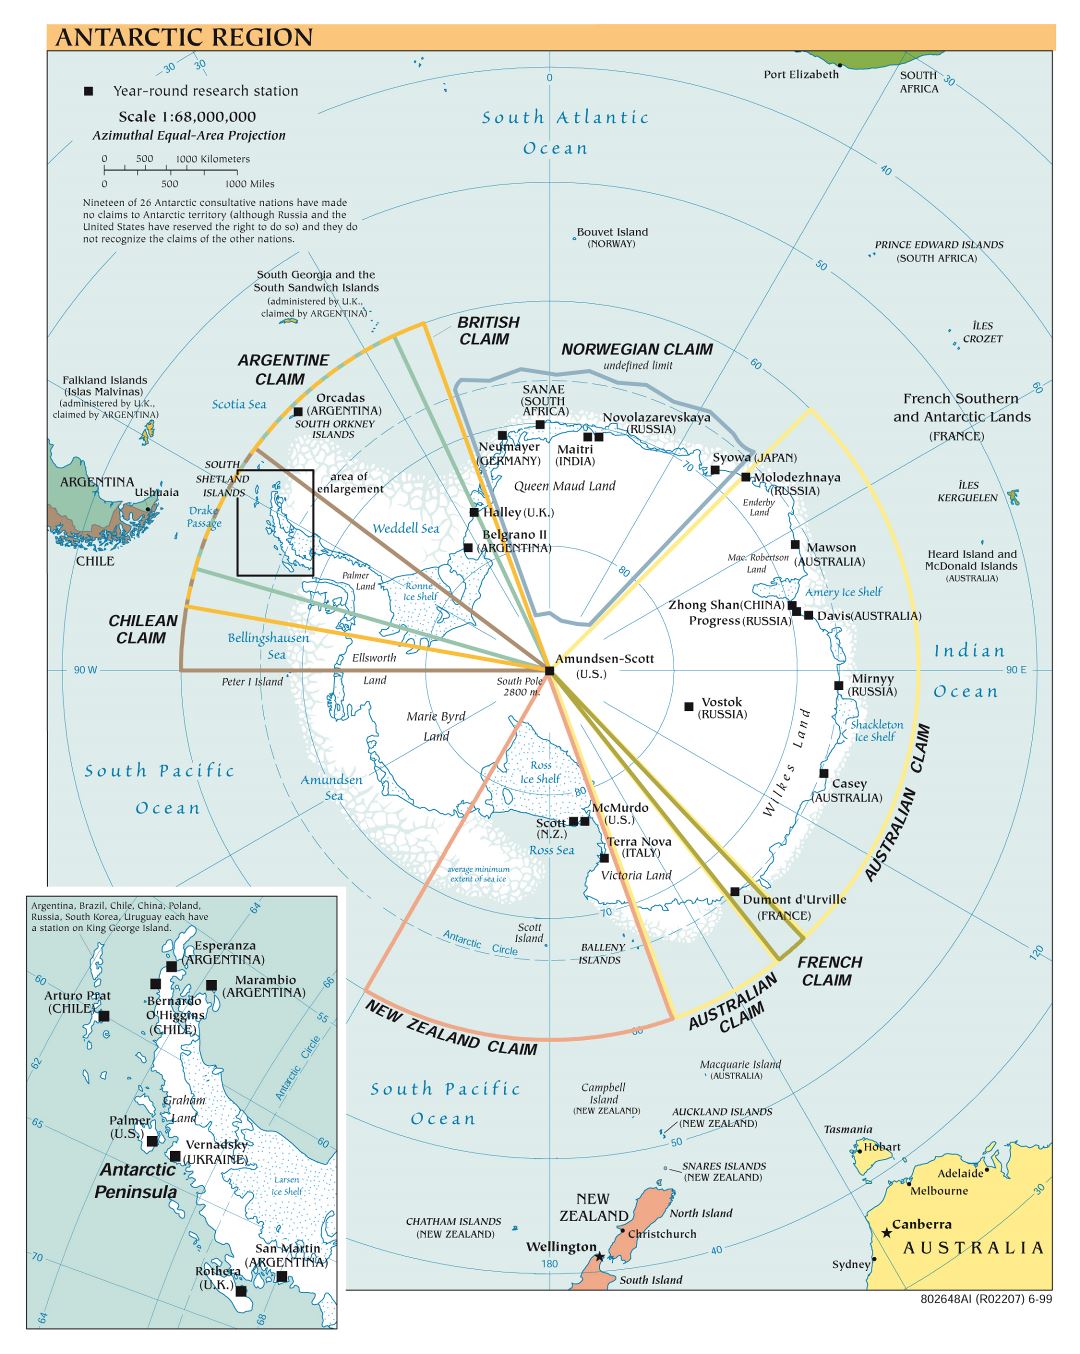 Large scale Antarctic Region political map - 1999